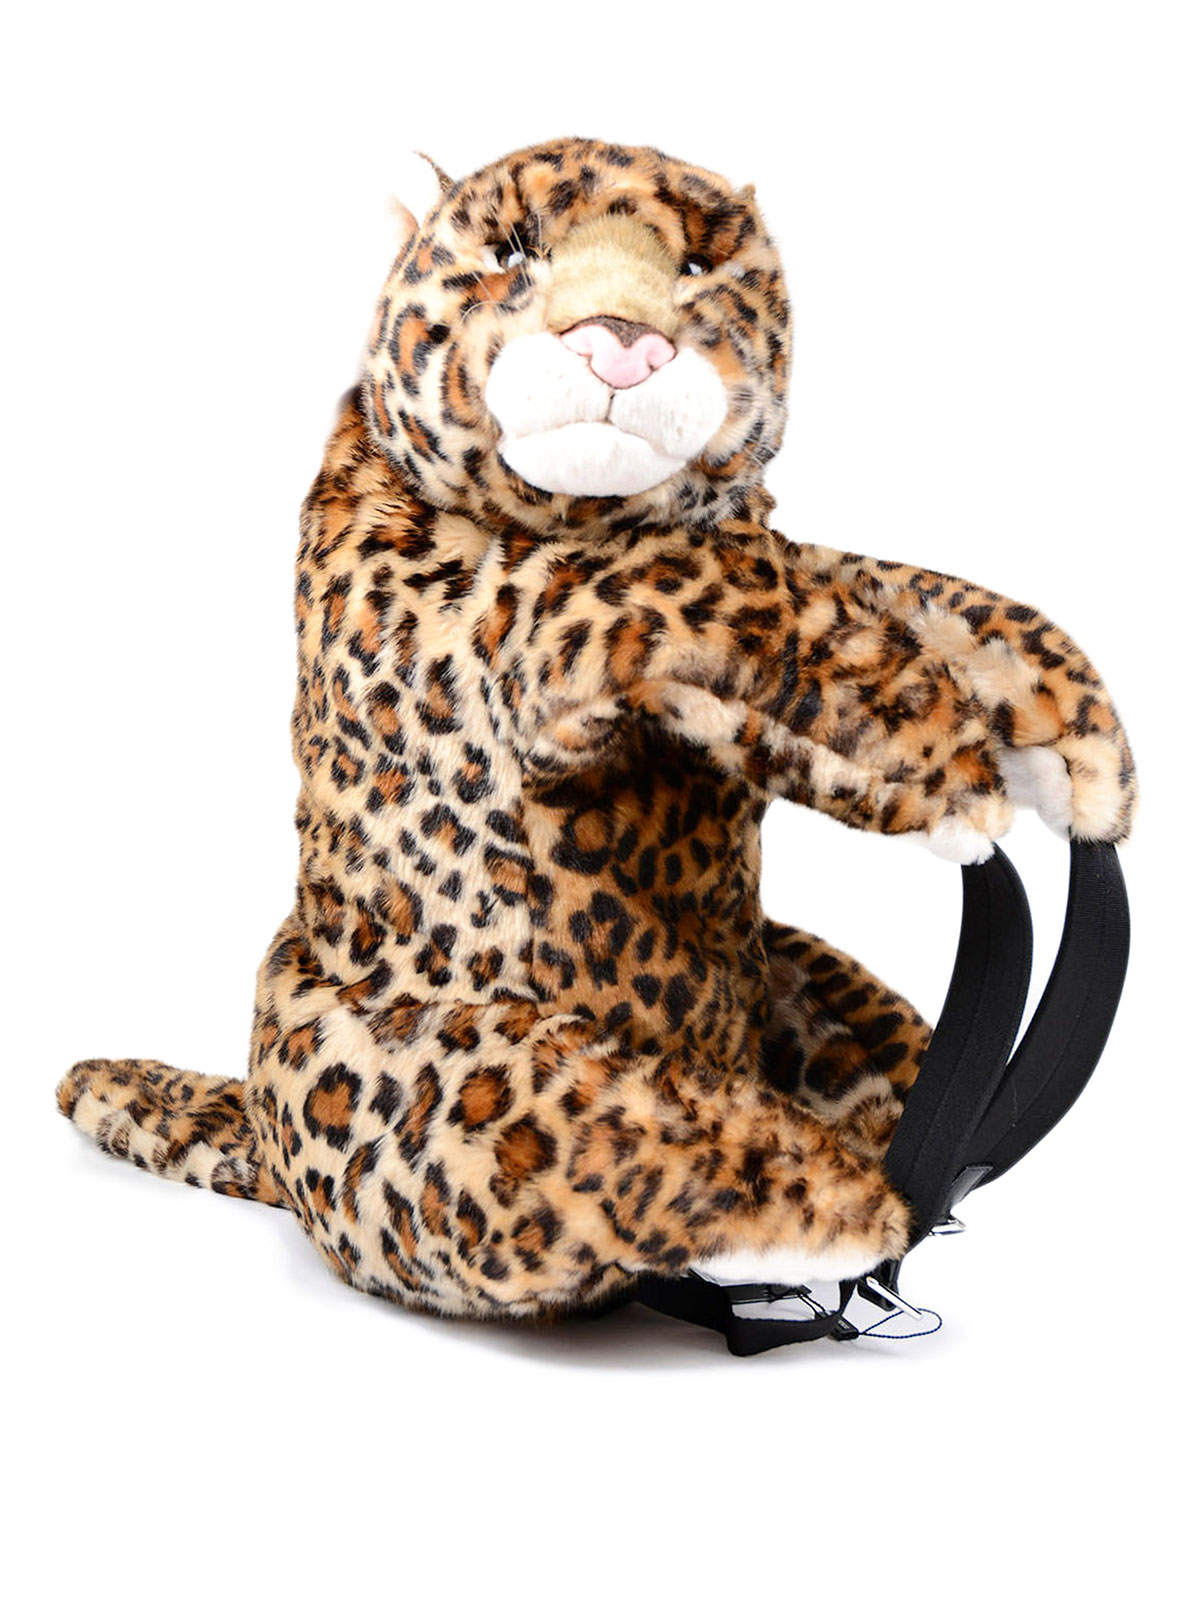 Backpacks Dolce & Gabbana - Stuffed animal inspired backpack -  BB6410AM6168S193